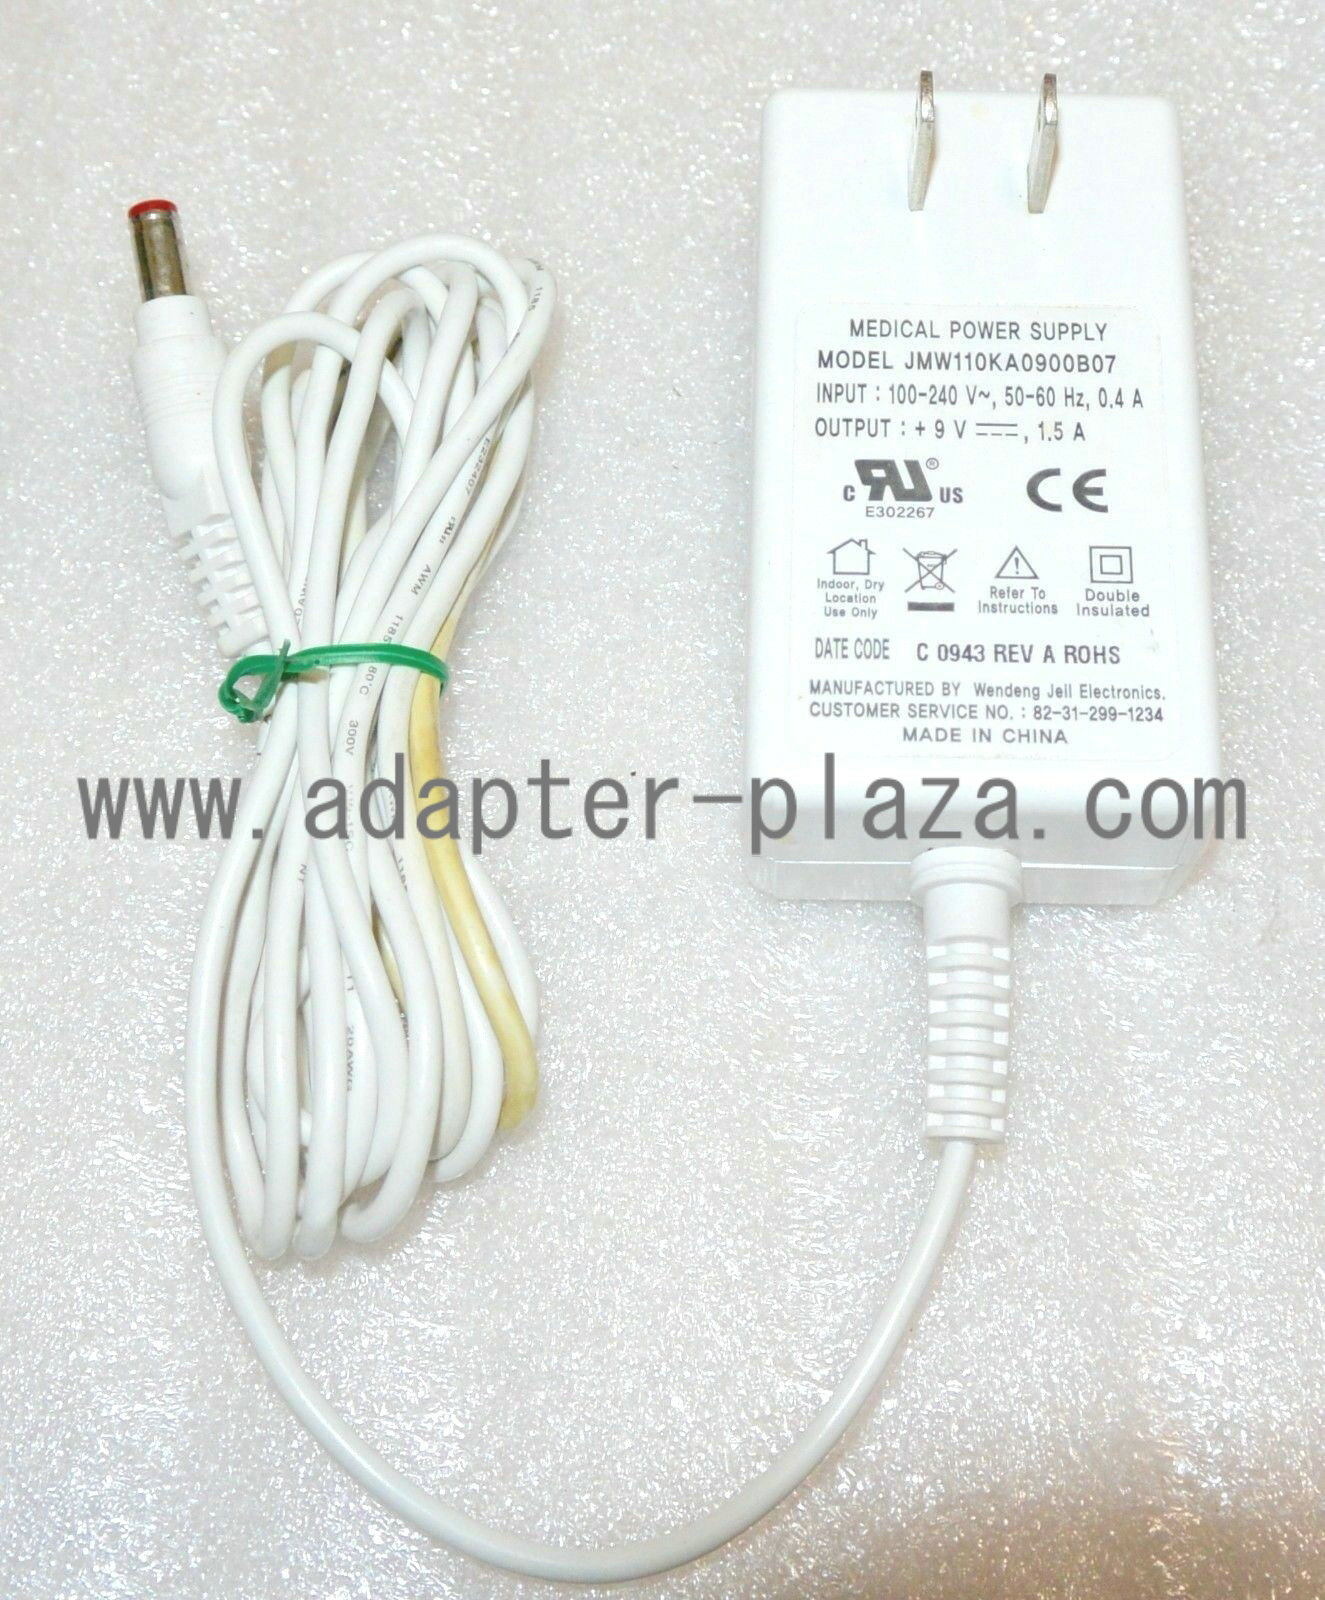 New AULT JMW110KA0900B07 Medical Power Supply 9v 1.5A AC ADAPTER - Click Image to Close